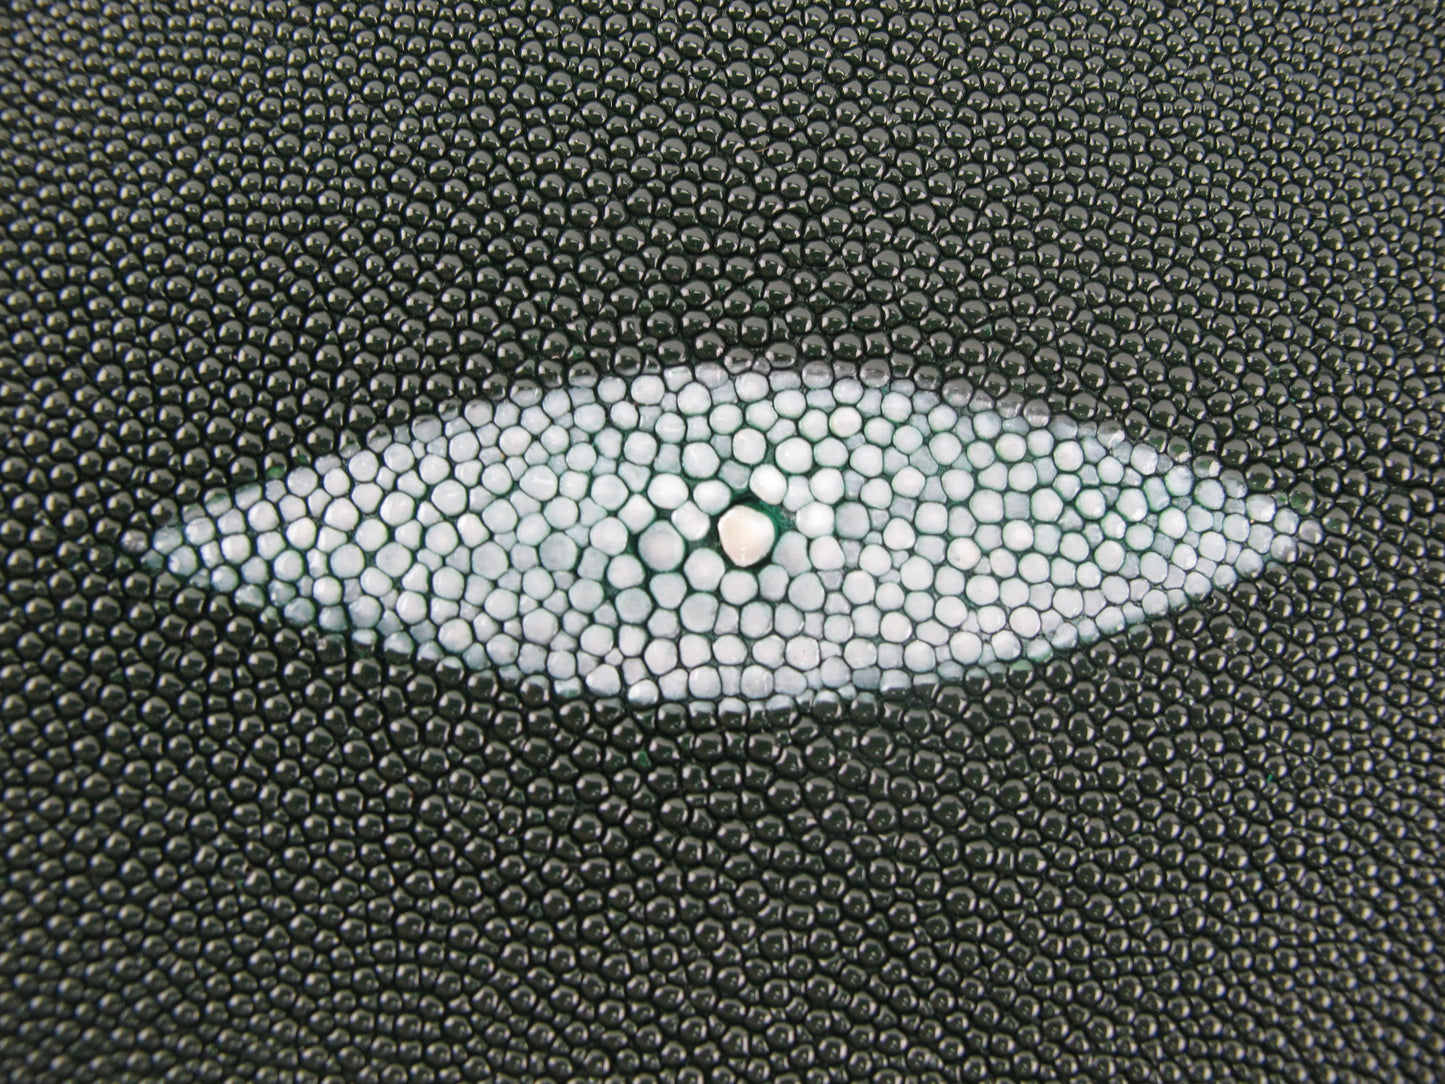 Genuine Stingray Skin Leather Round Shape Hide Pelt Fir Green